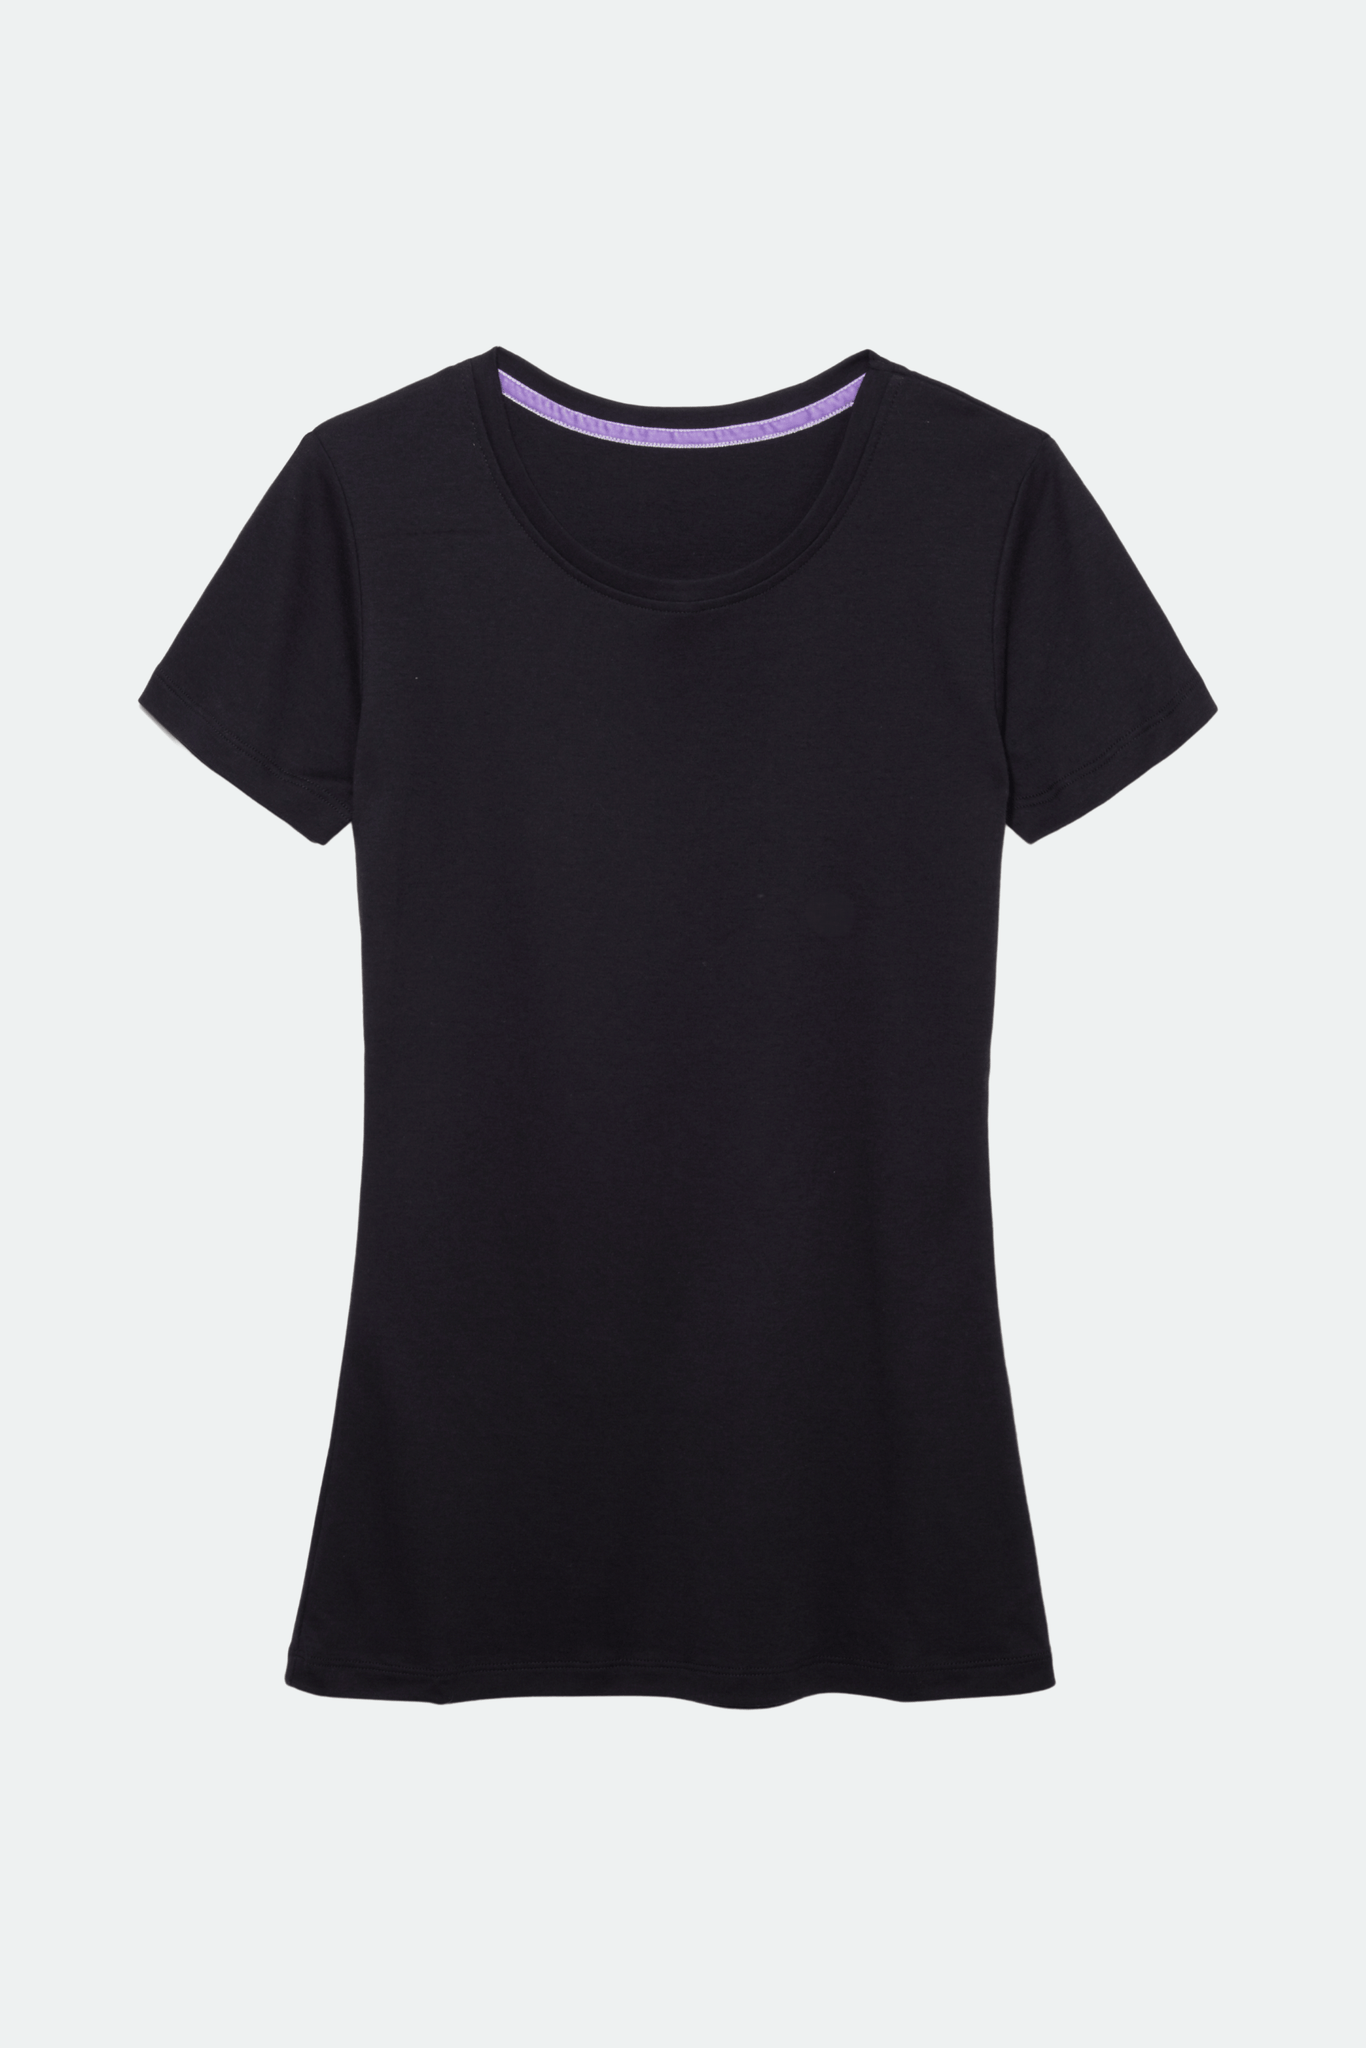 Women's Short Sleeve Crew Neck Cotton Modal Blend T-shirt Bundle Black | Short Sleeve Multi Pack T-shirts | Lavender Hill Clothing